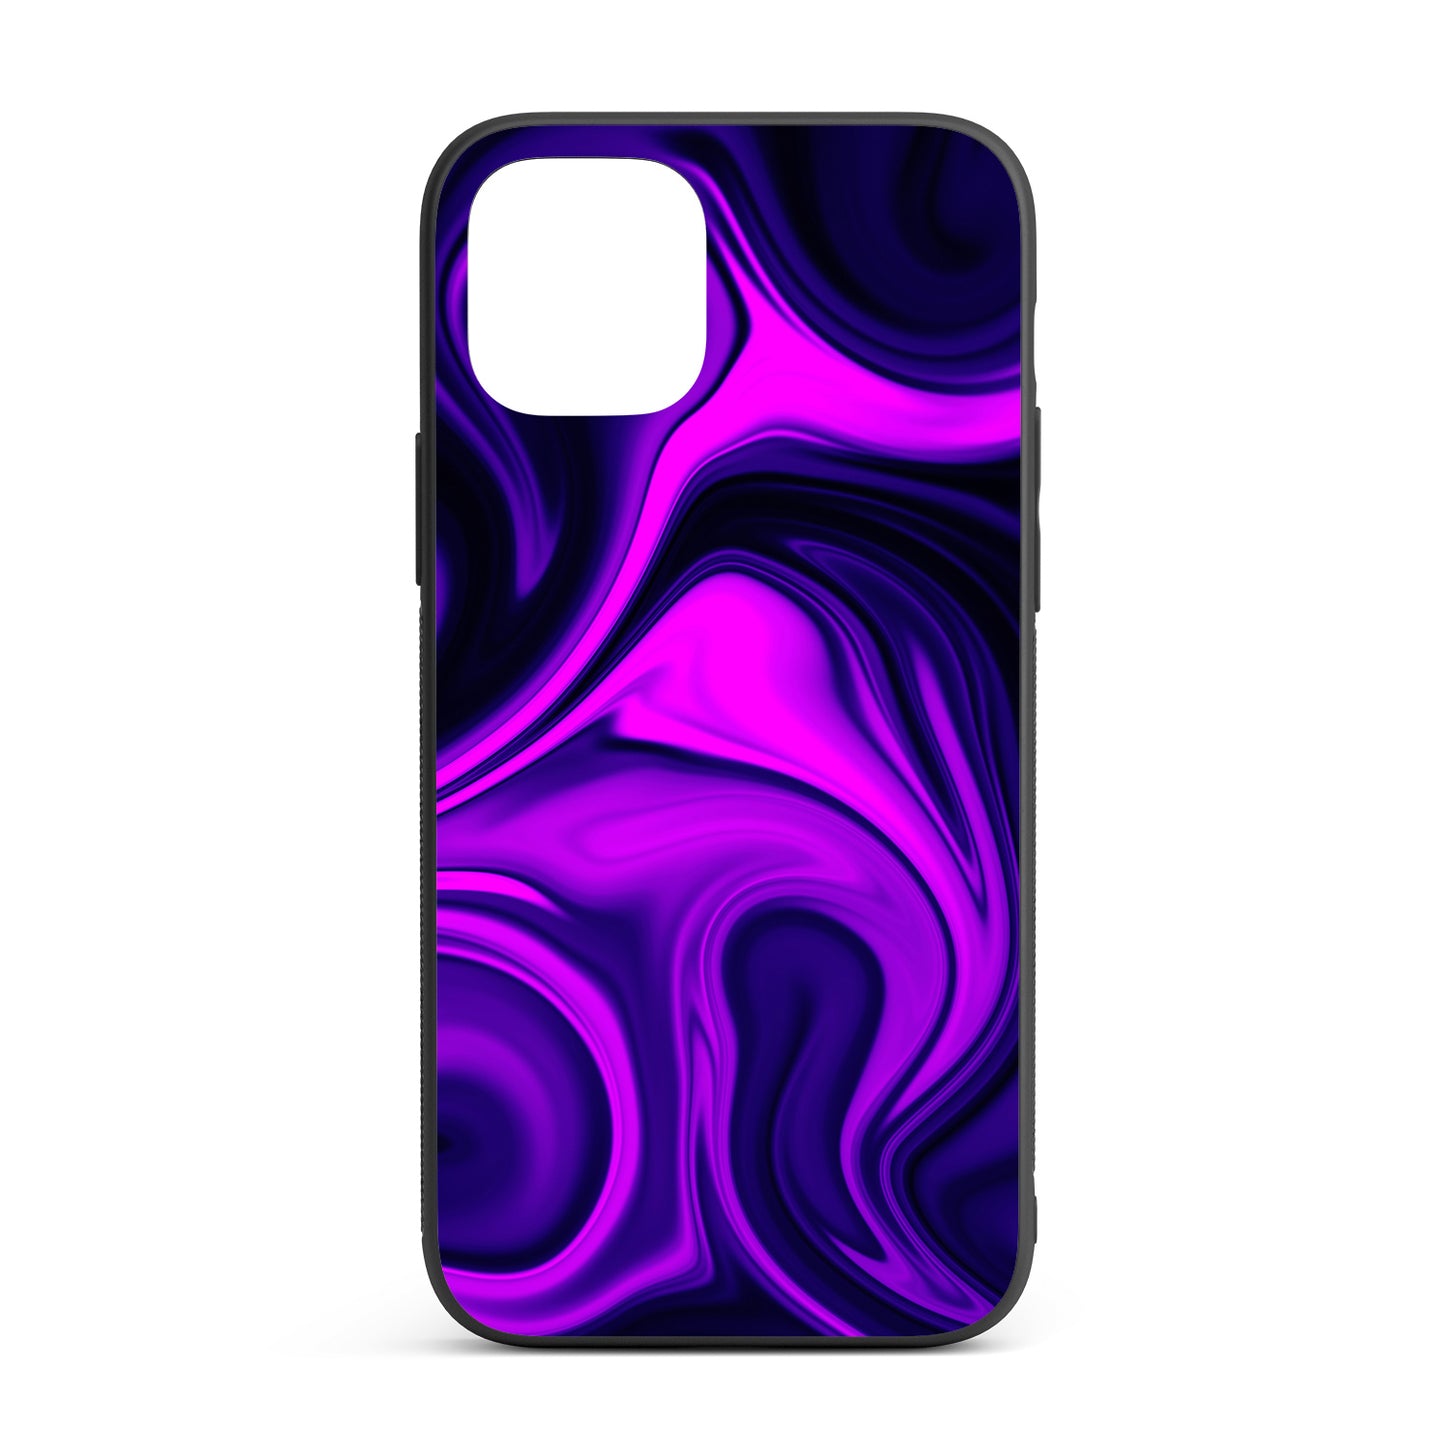 Purple liquid marble pattern iPhone glass case